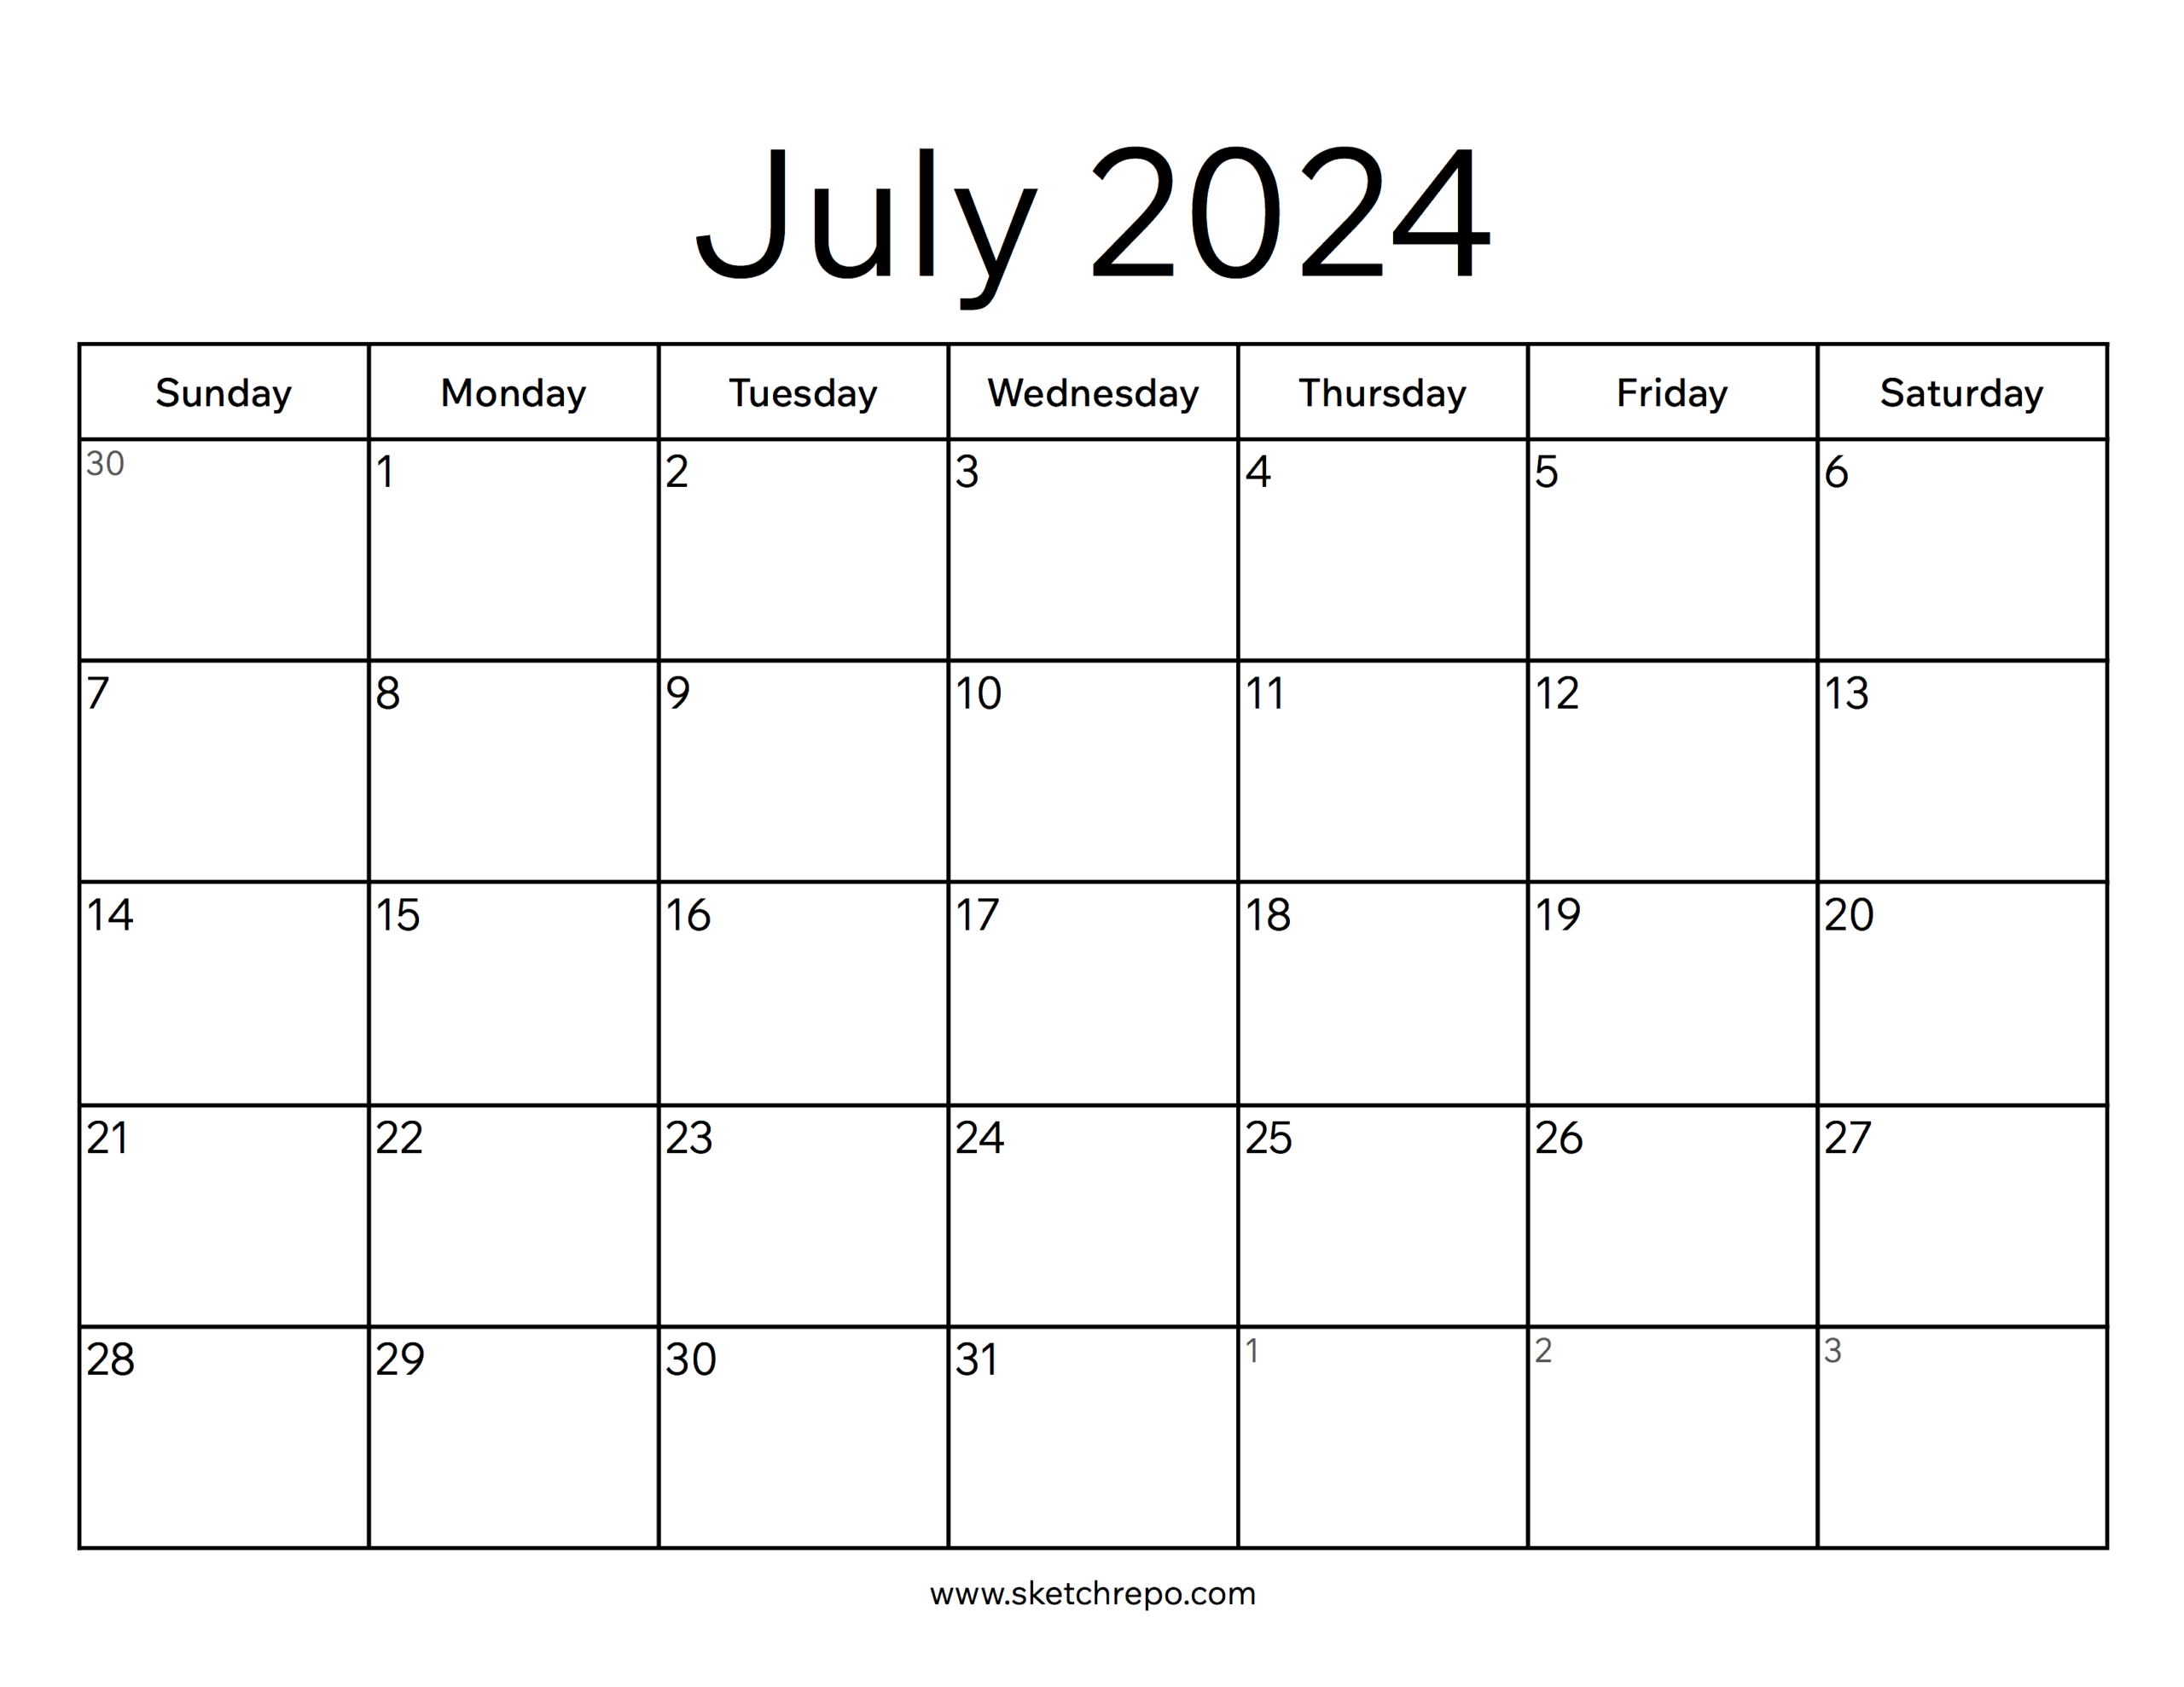 July 2024 Calendar – Sketch Repo | The Calendar Of July 2024